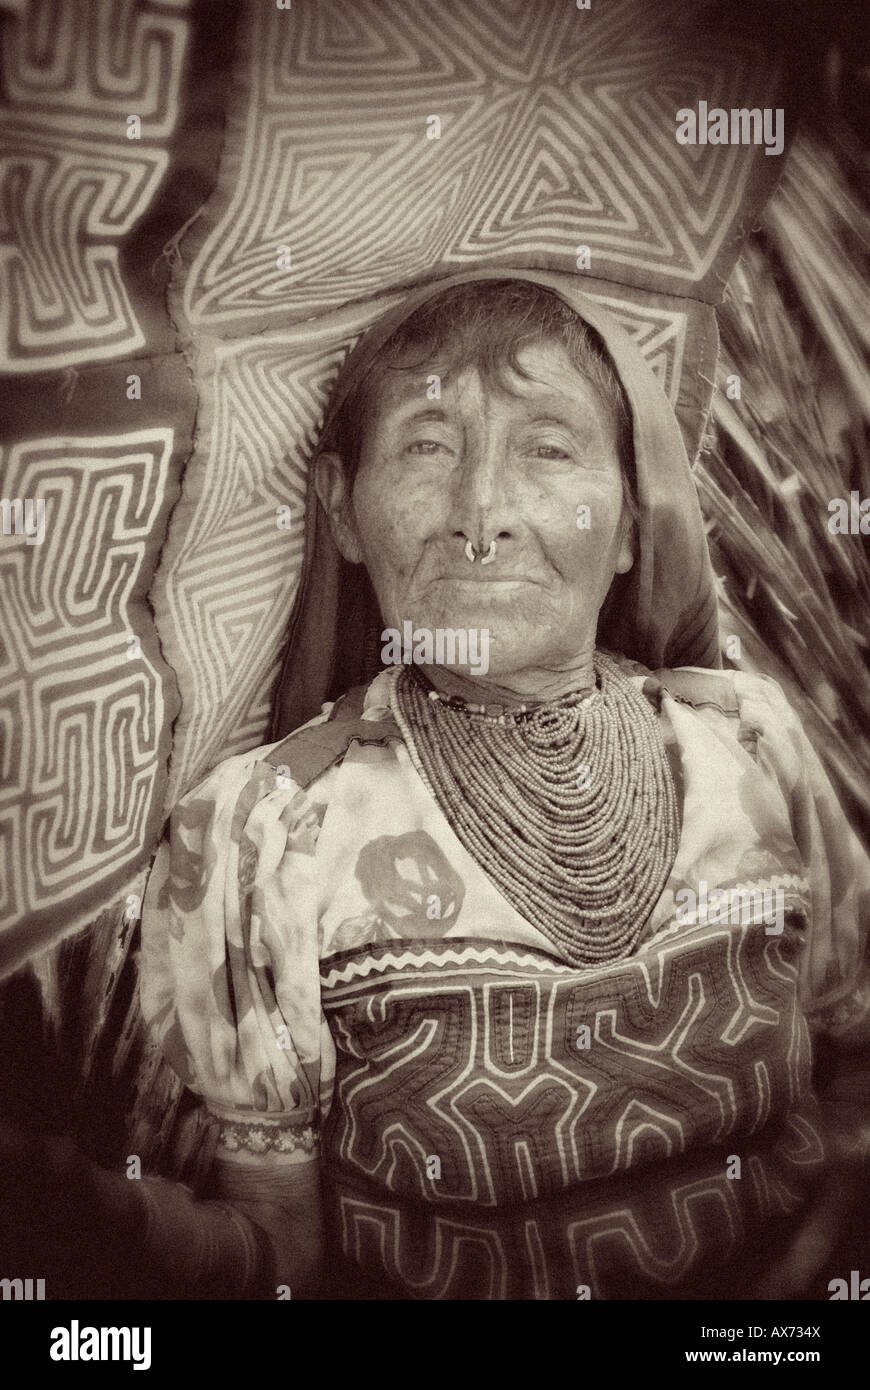 Kuna Indian, woman, San Blas Islands, Panama Stock Photo